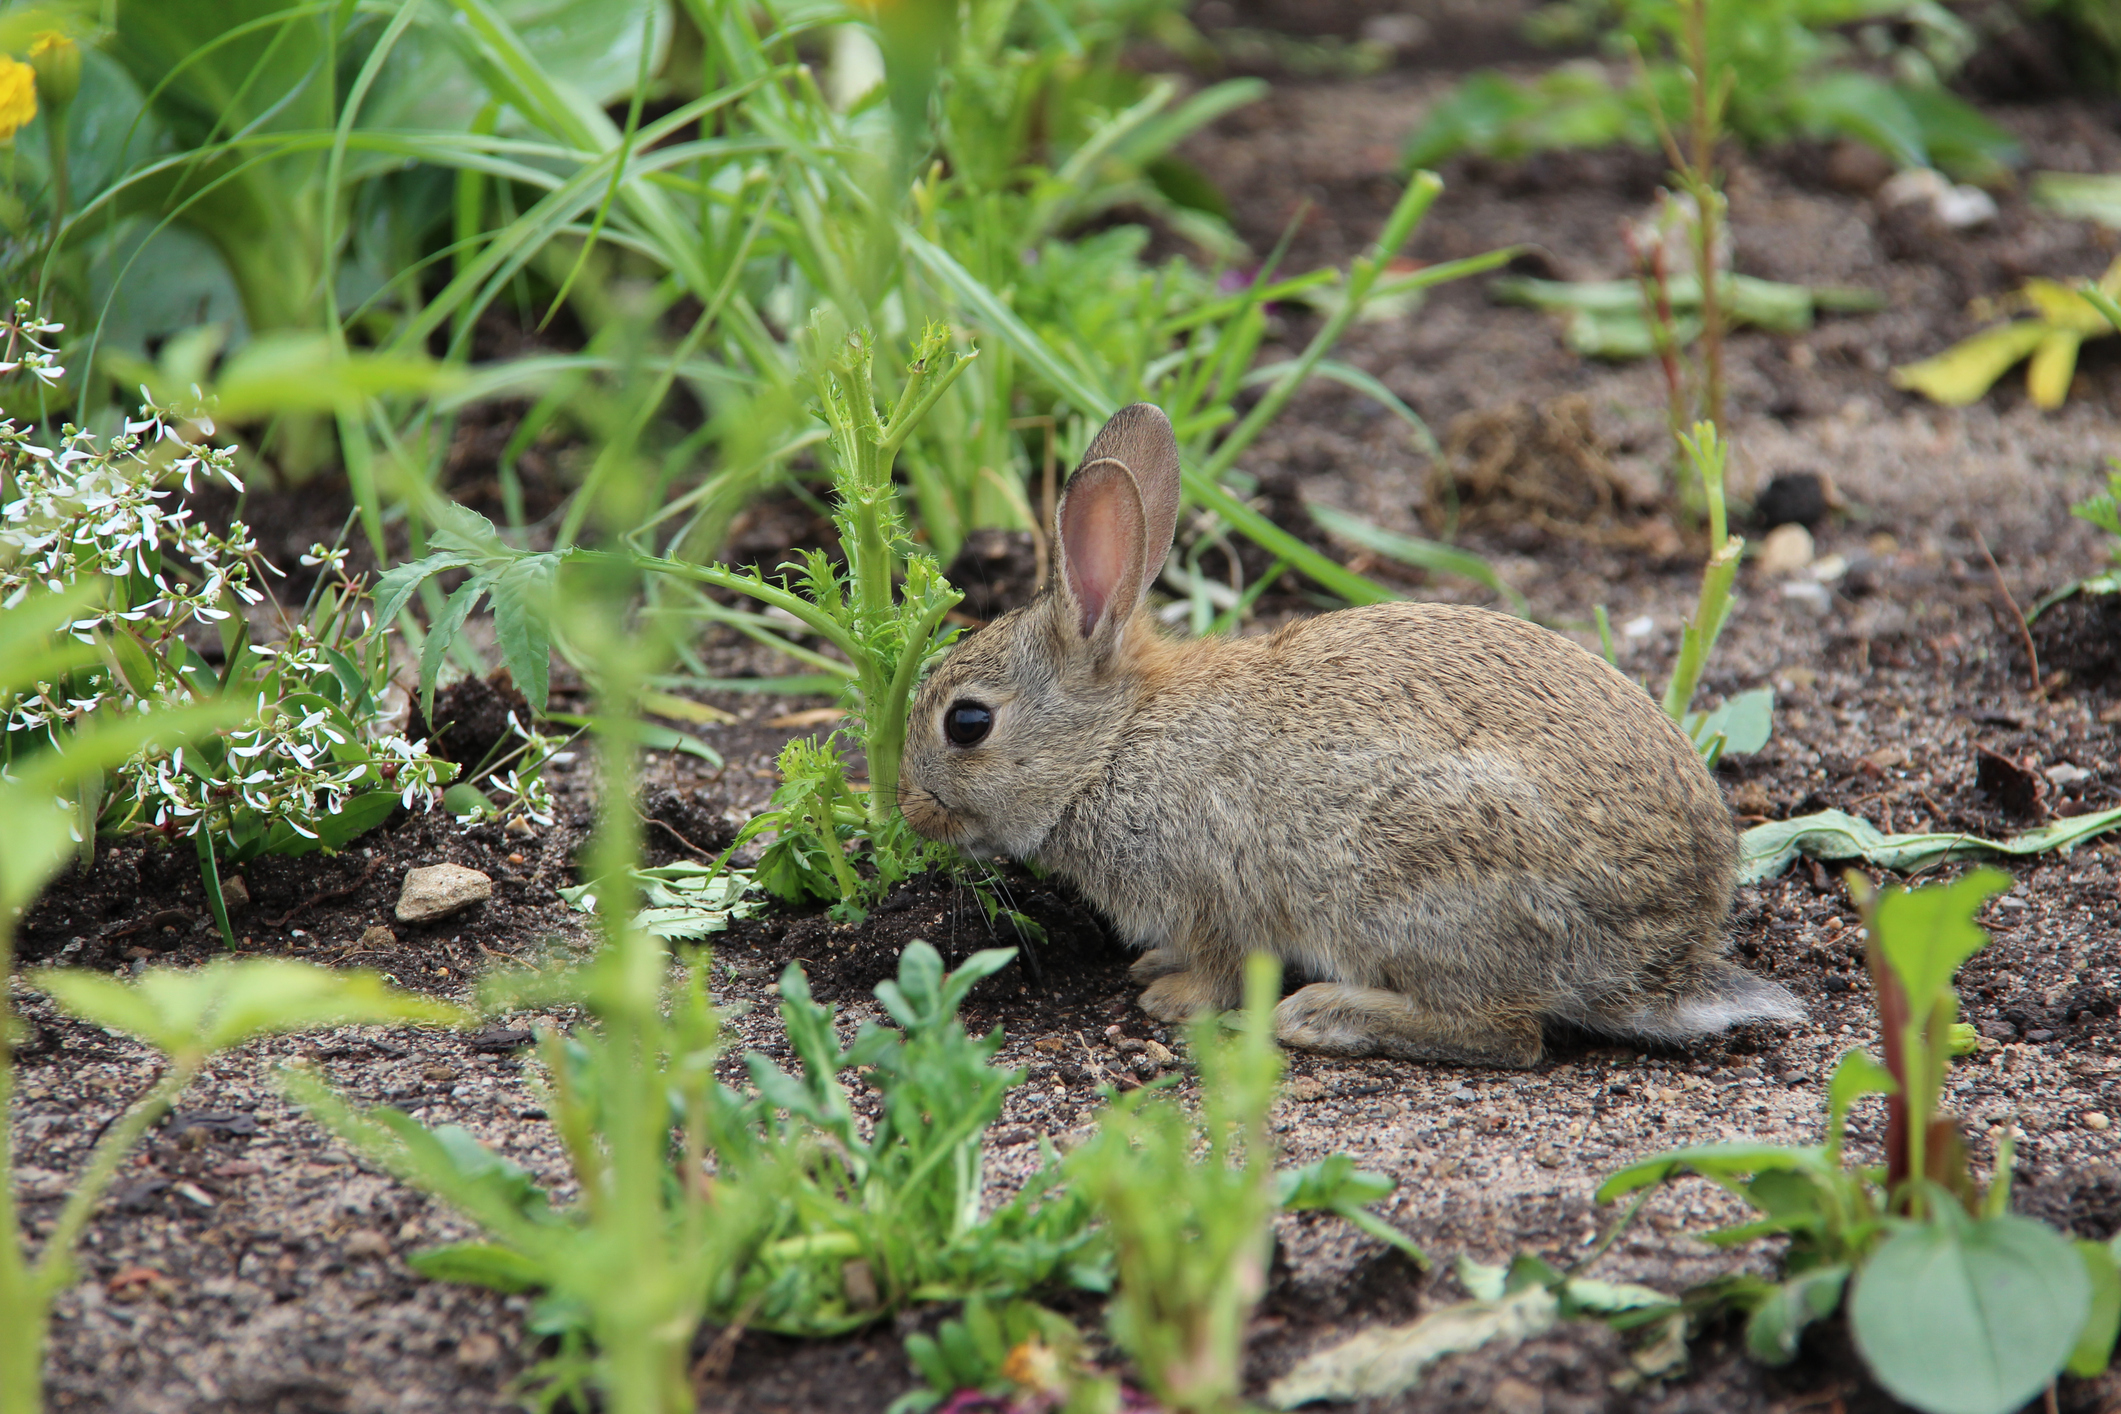 Rabbit in a garden (Photo: iStock - LeoMalsam)